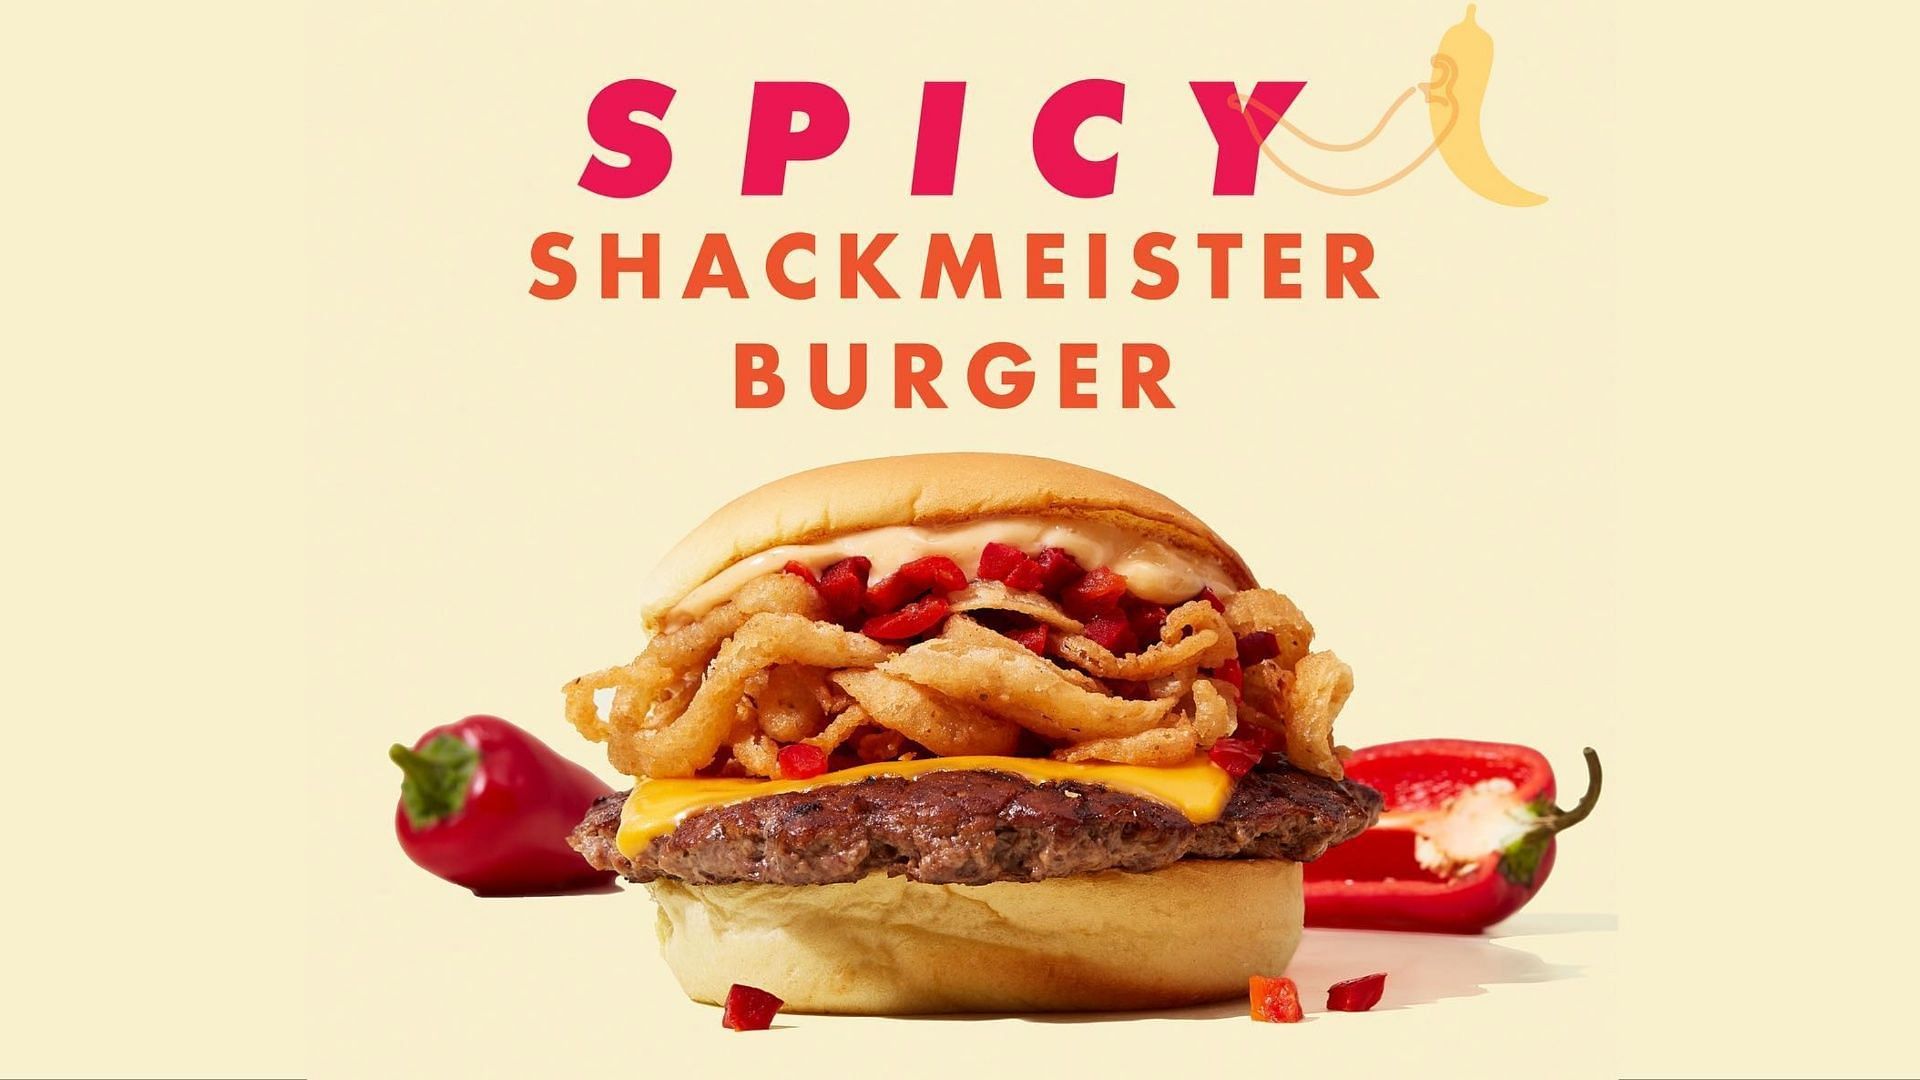 New Spicy Shackmeister Burger (Image via Shake Shack)